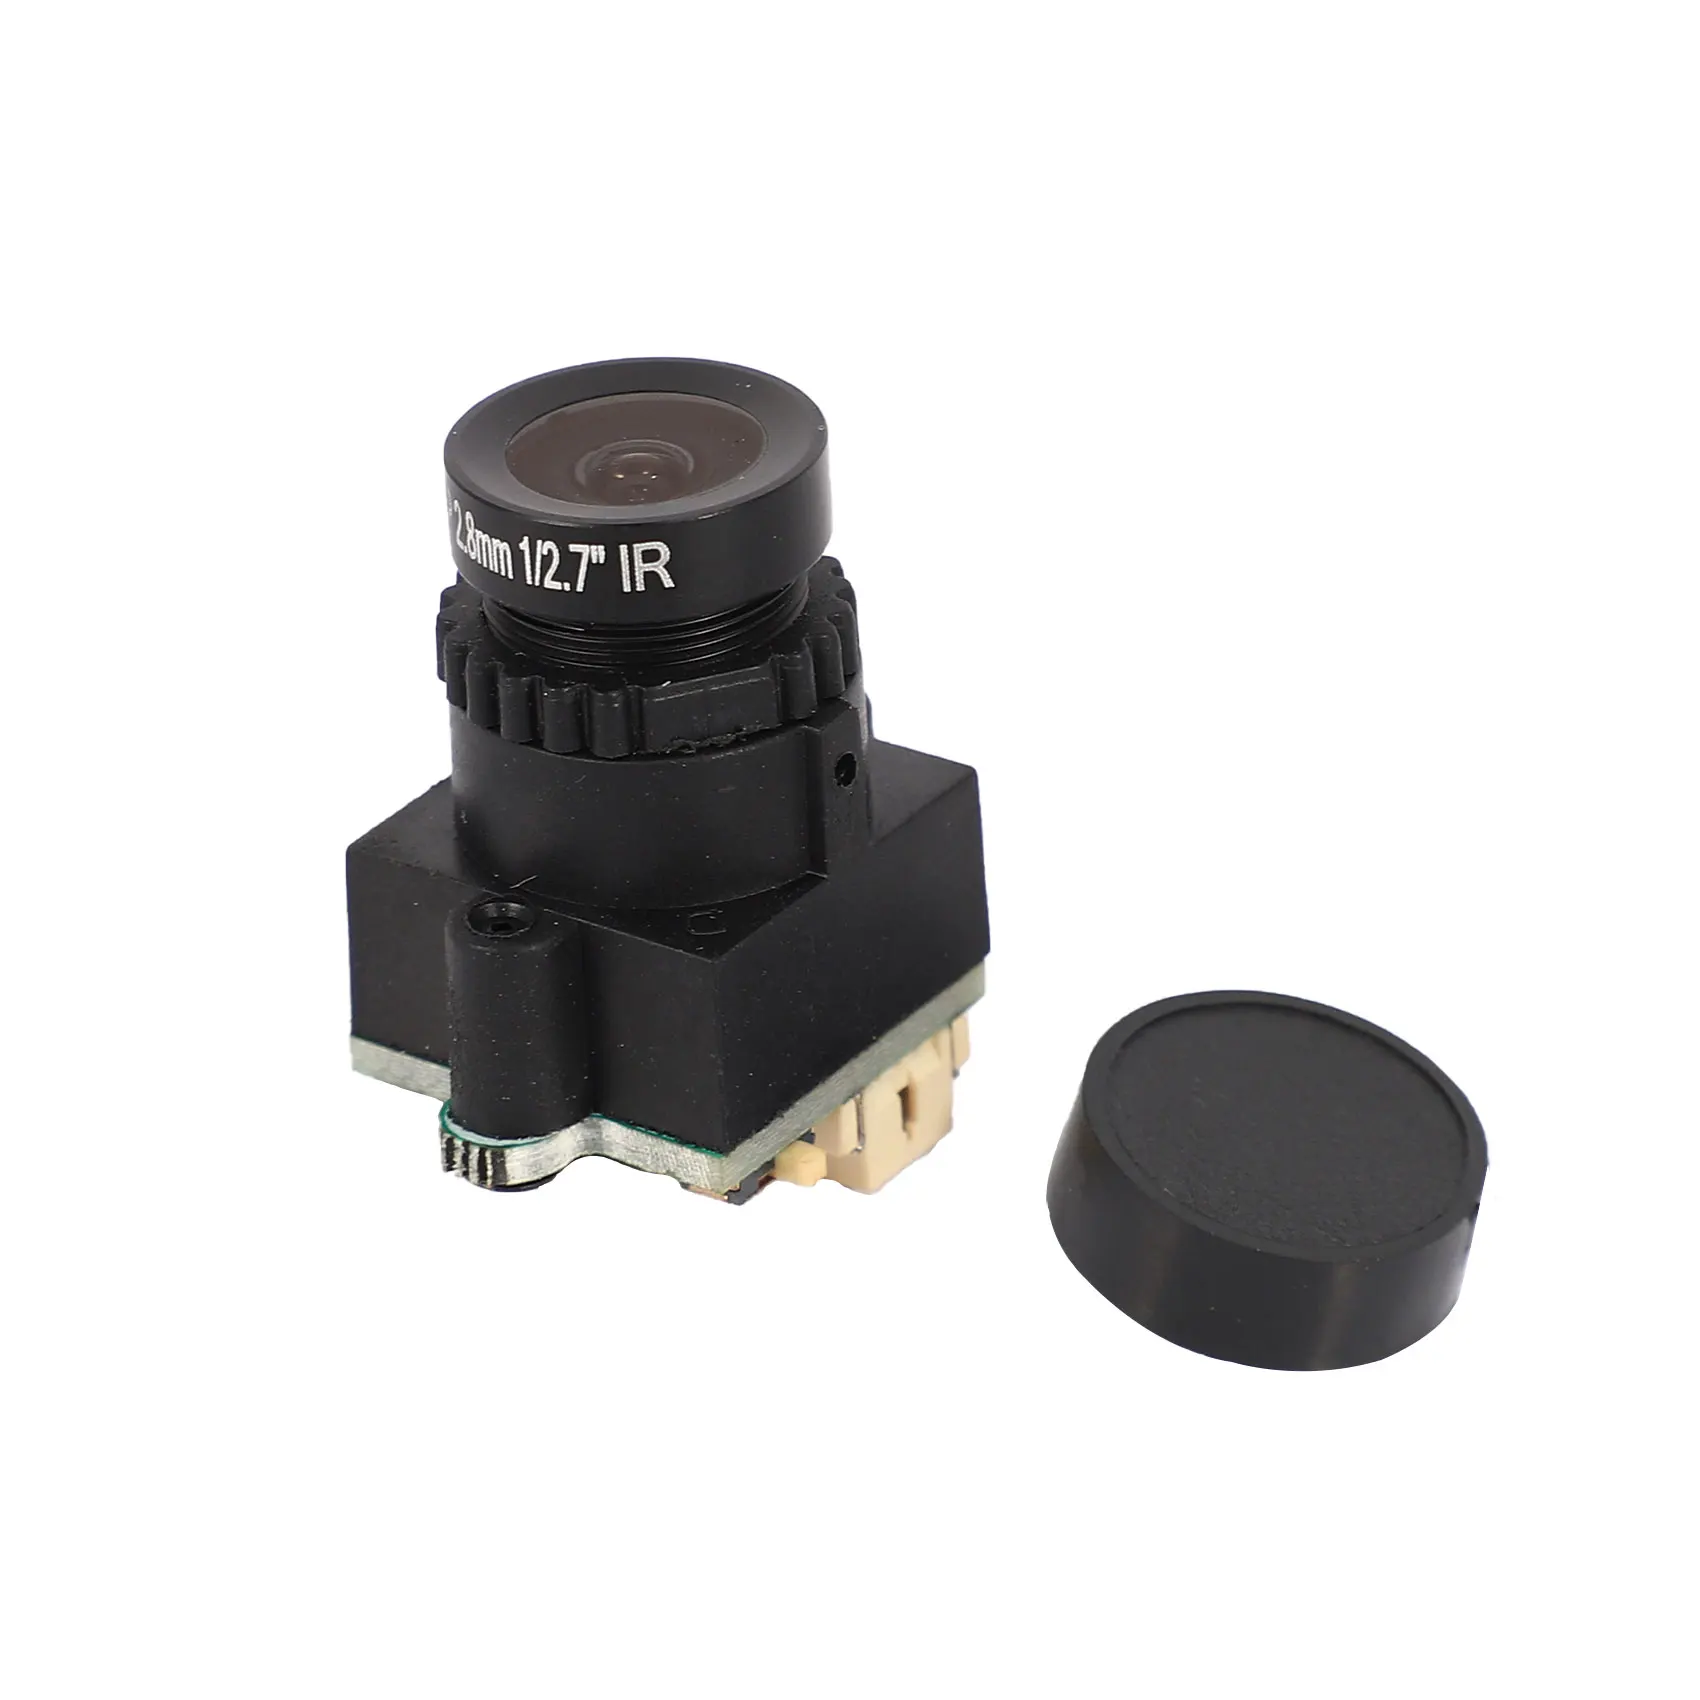 

1000TVL FPV Camera 2.8mm Wide Angle Lens CMOS NTSC PAL for QAV250 Multicopter